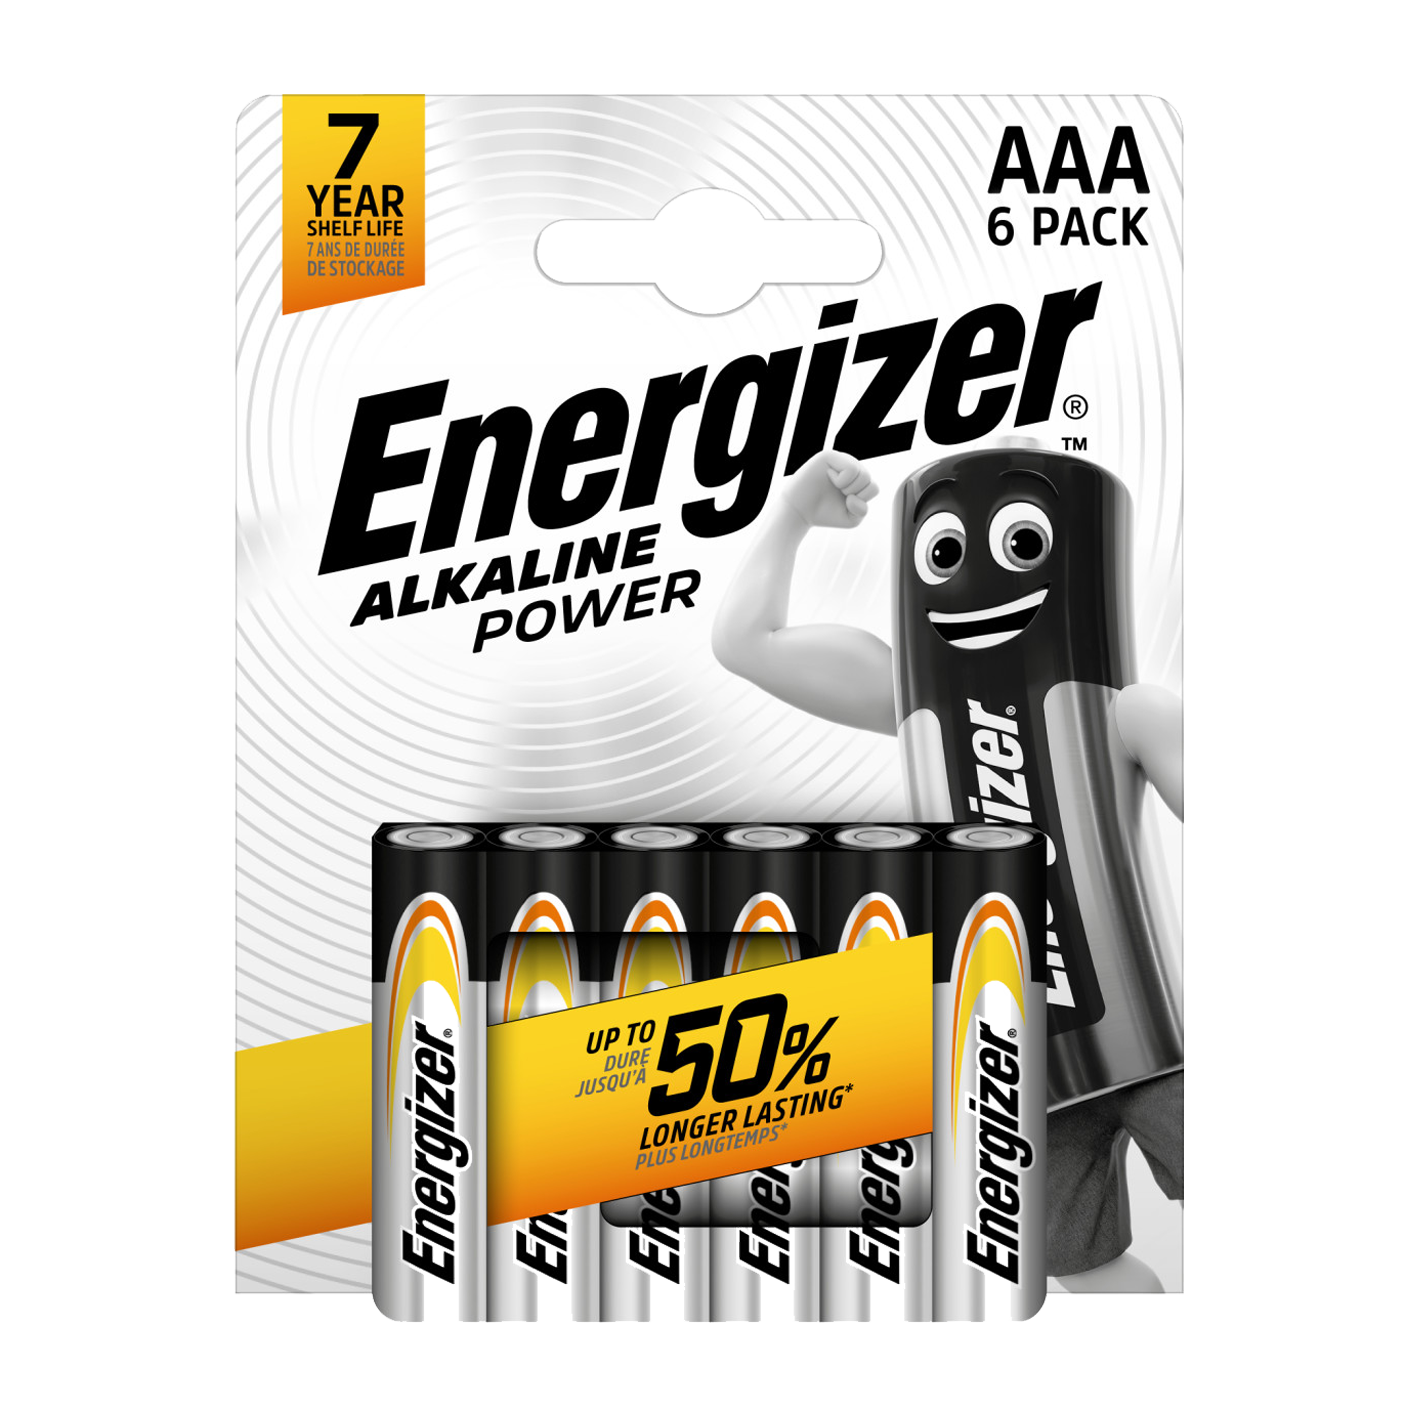 Energizer AAA Alkaline Power, Pack of 4